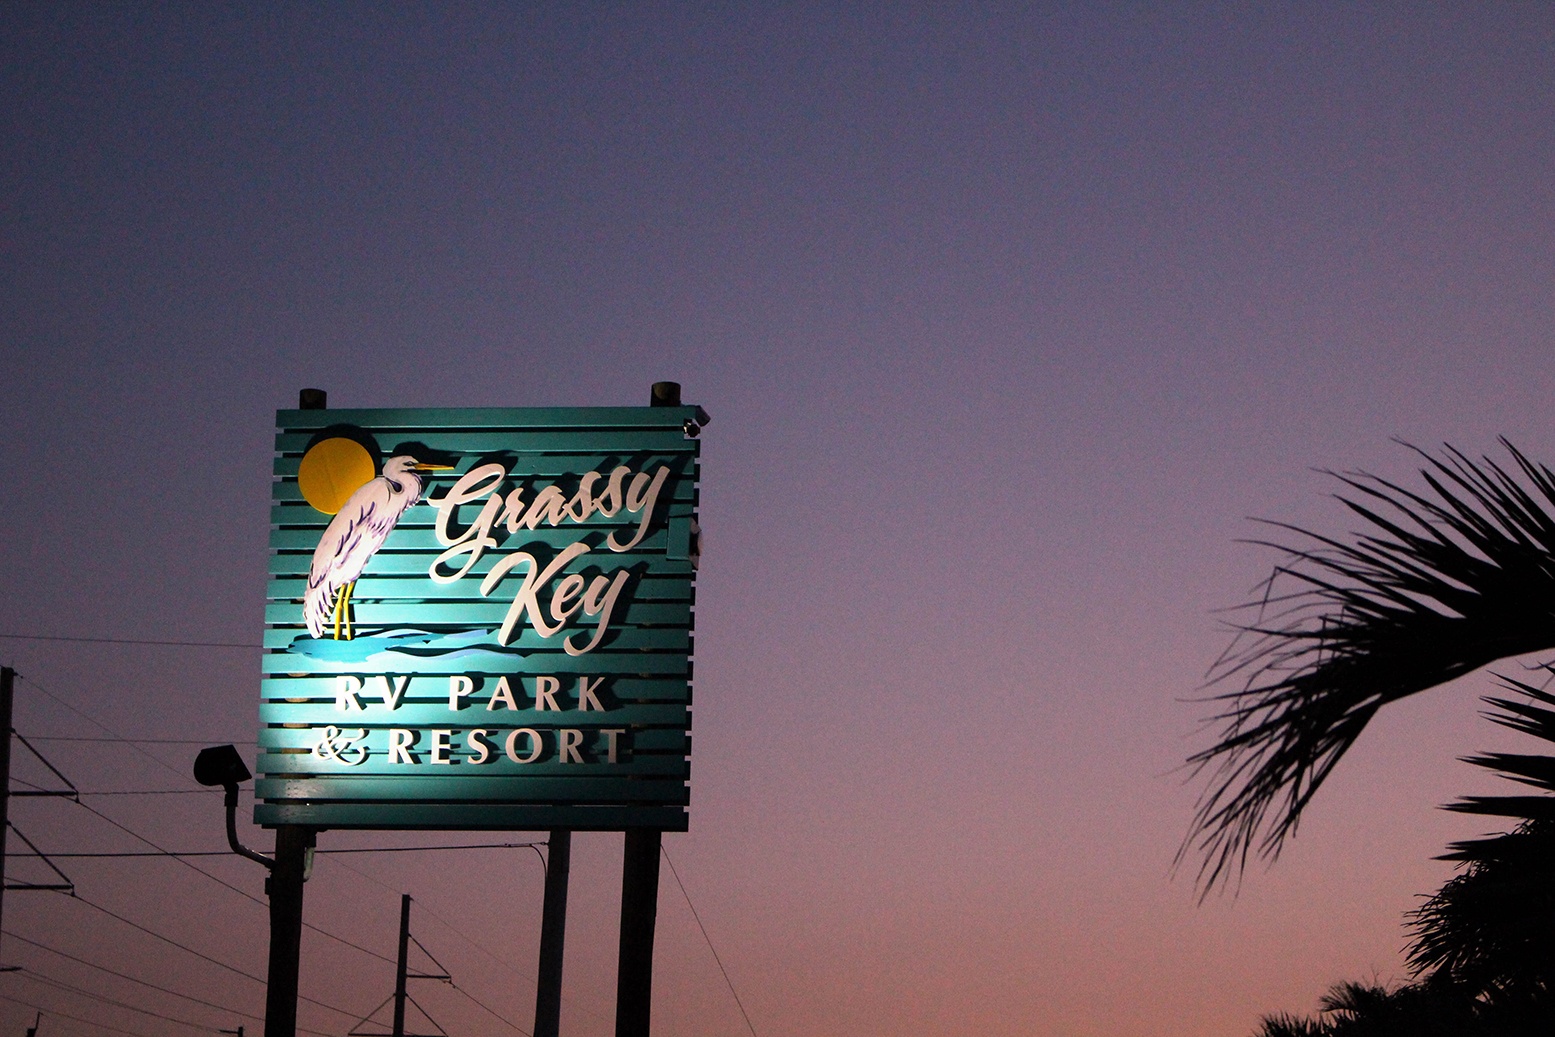 Grassy Key RV Park & Resort in Marathon, Florida